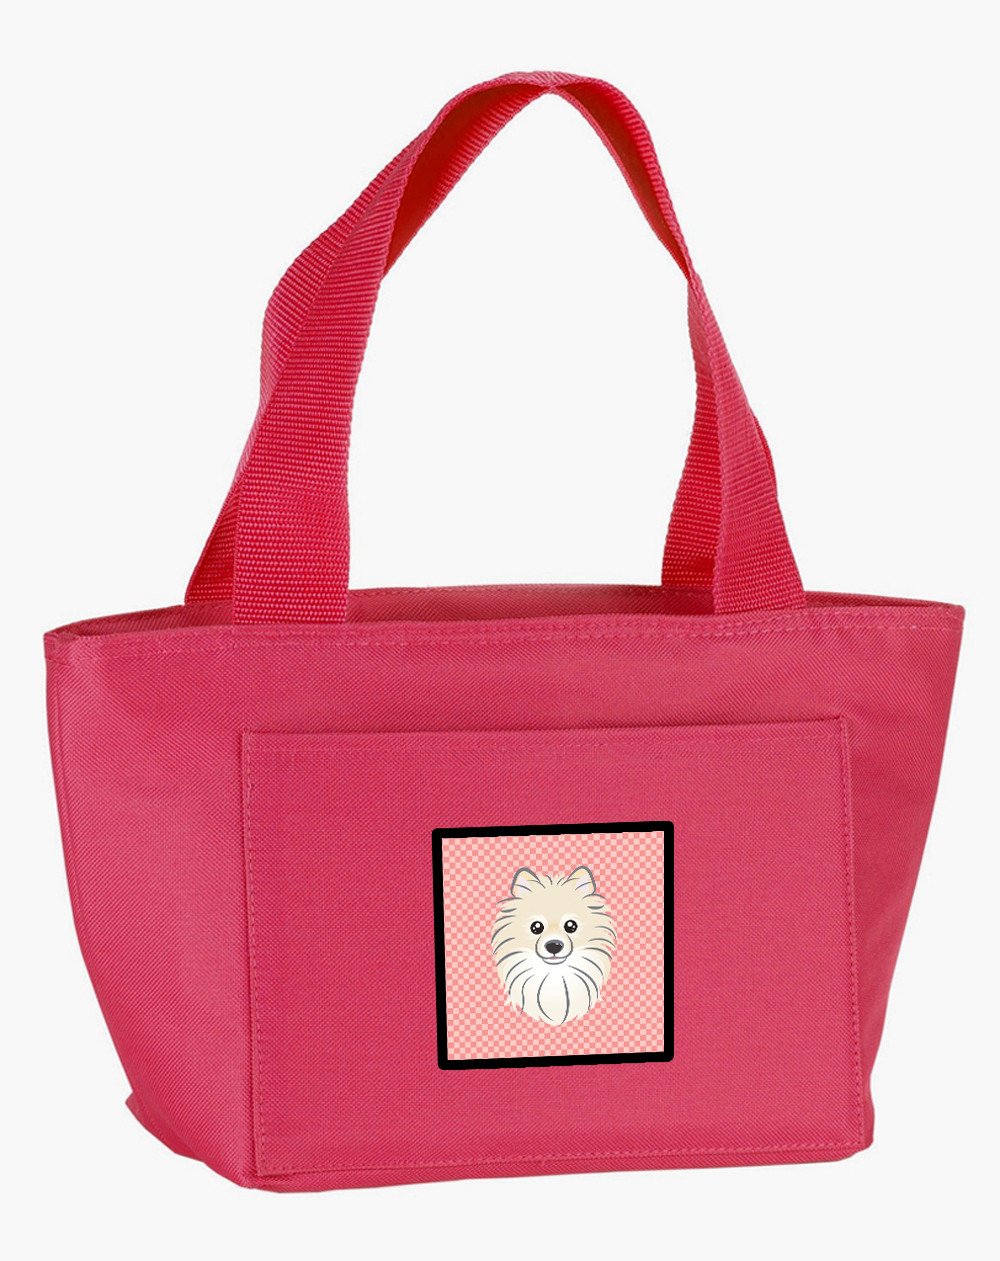 Checkerboard Pink Pomeranian Lunch Bag BB1207PK-8808 by Caroline's Treasures